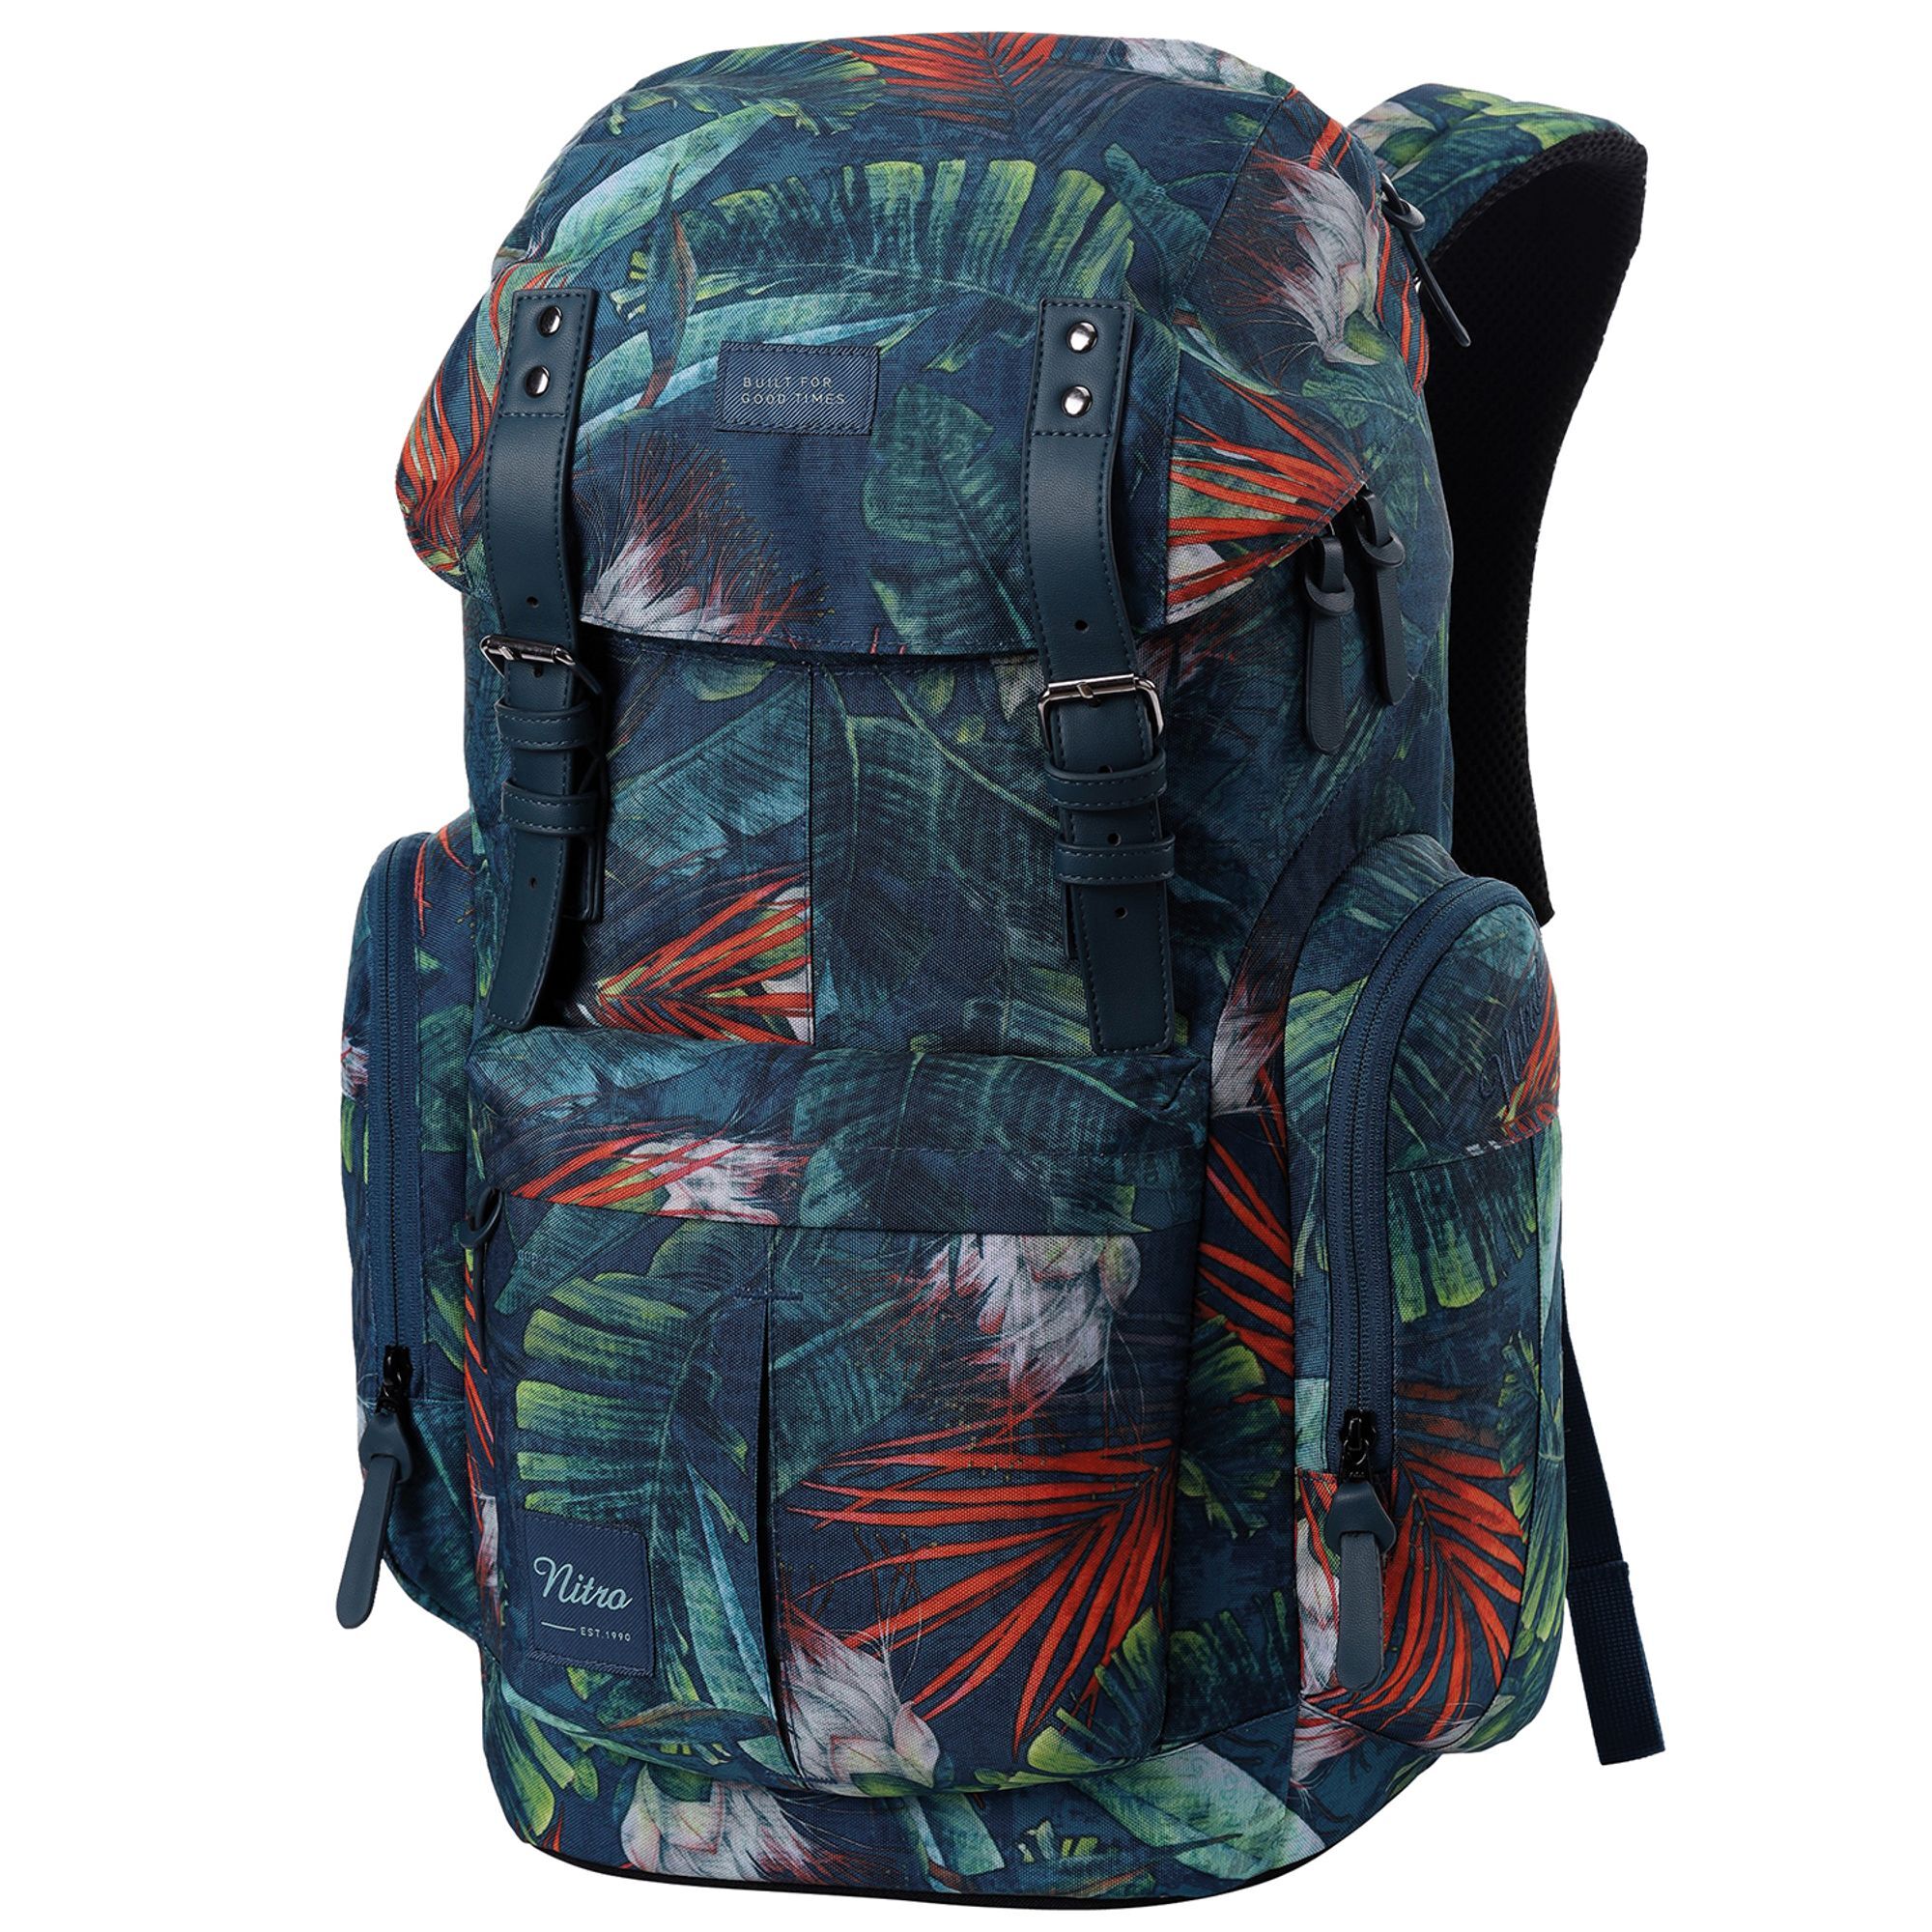 Рюкзак Nitro Urban Daypacker 46 cm Laptopfach, цвет tropical